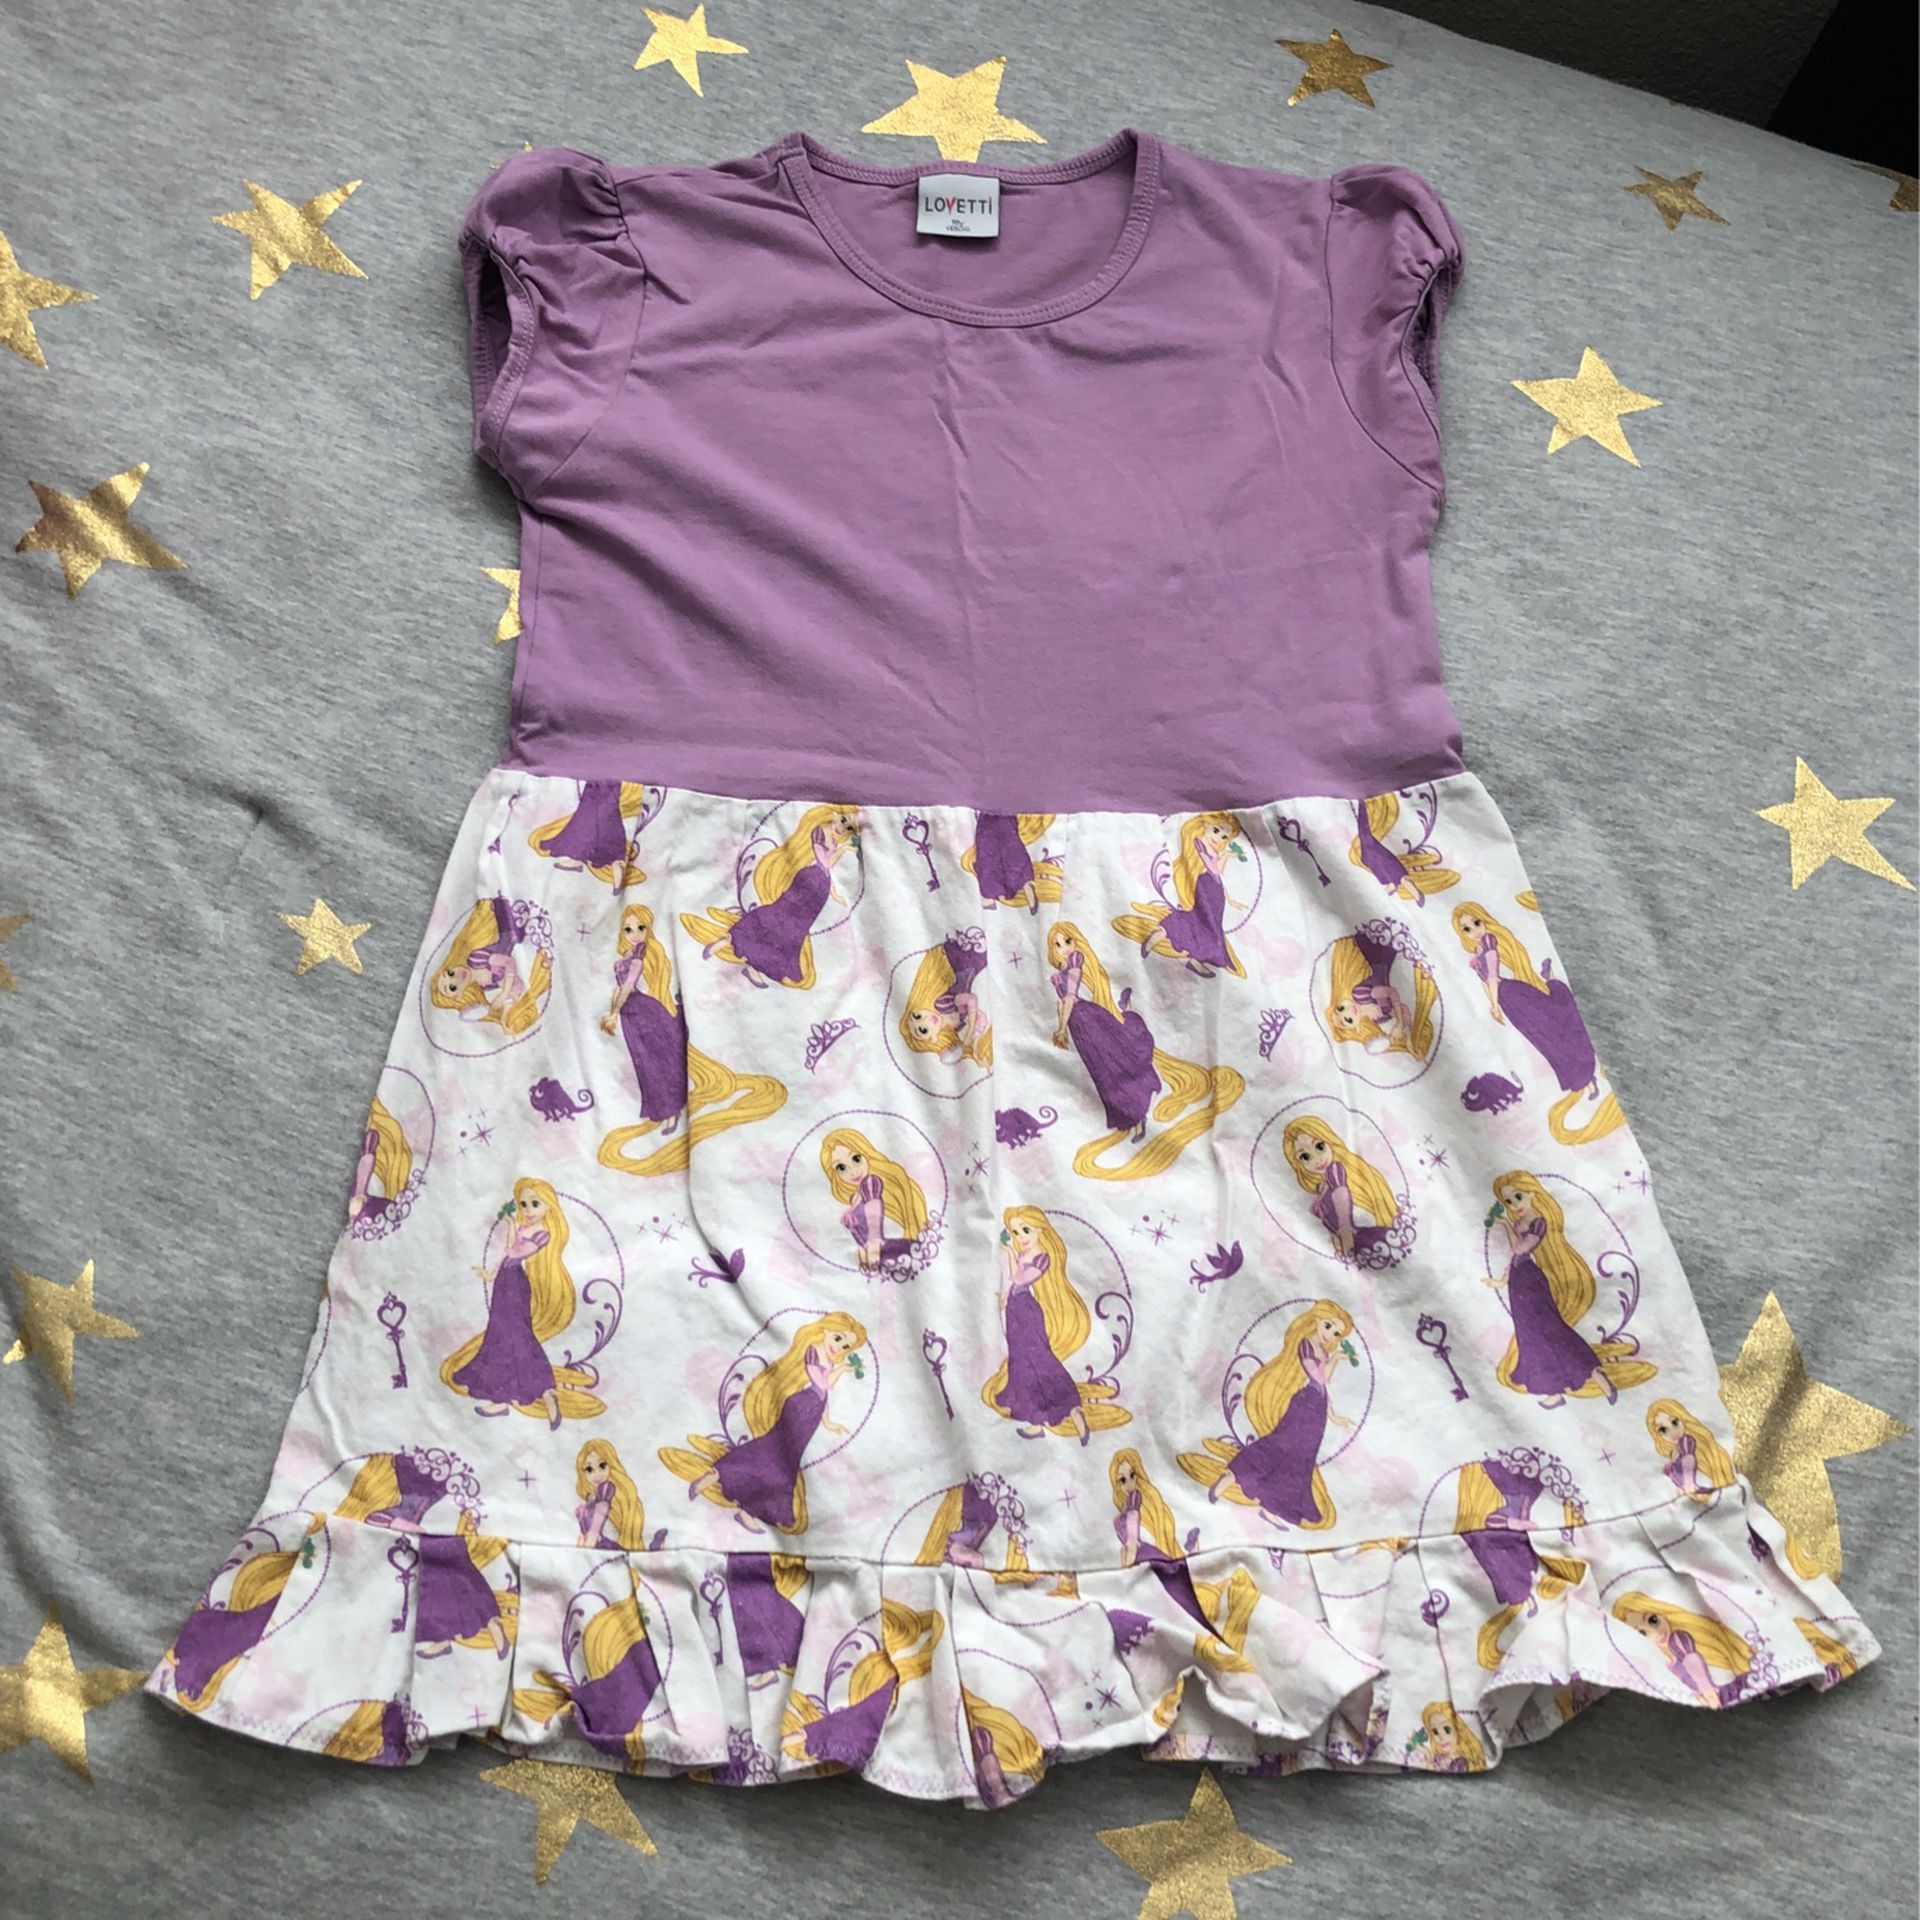 Girl’s Rapunzel/Disney Handmade Dress Size 10